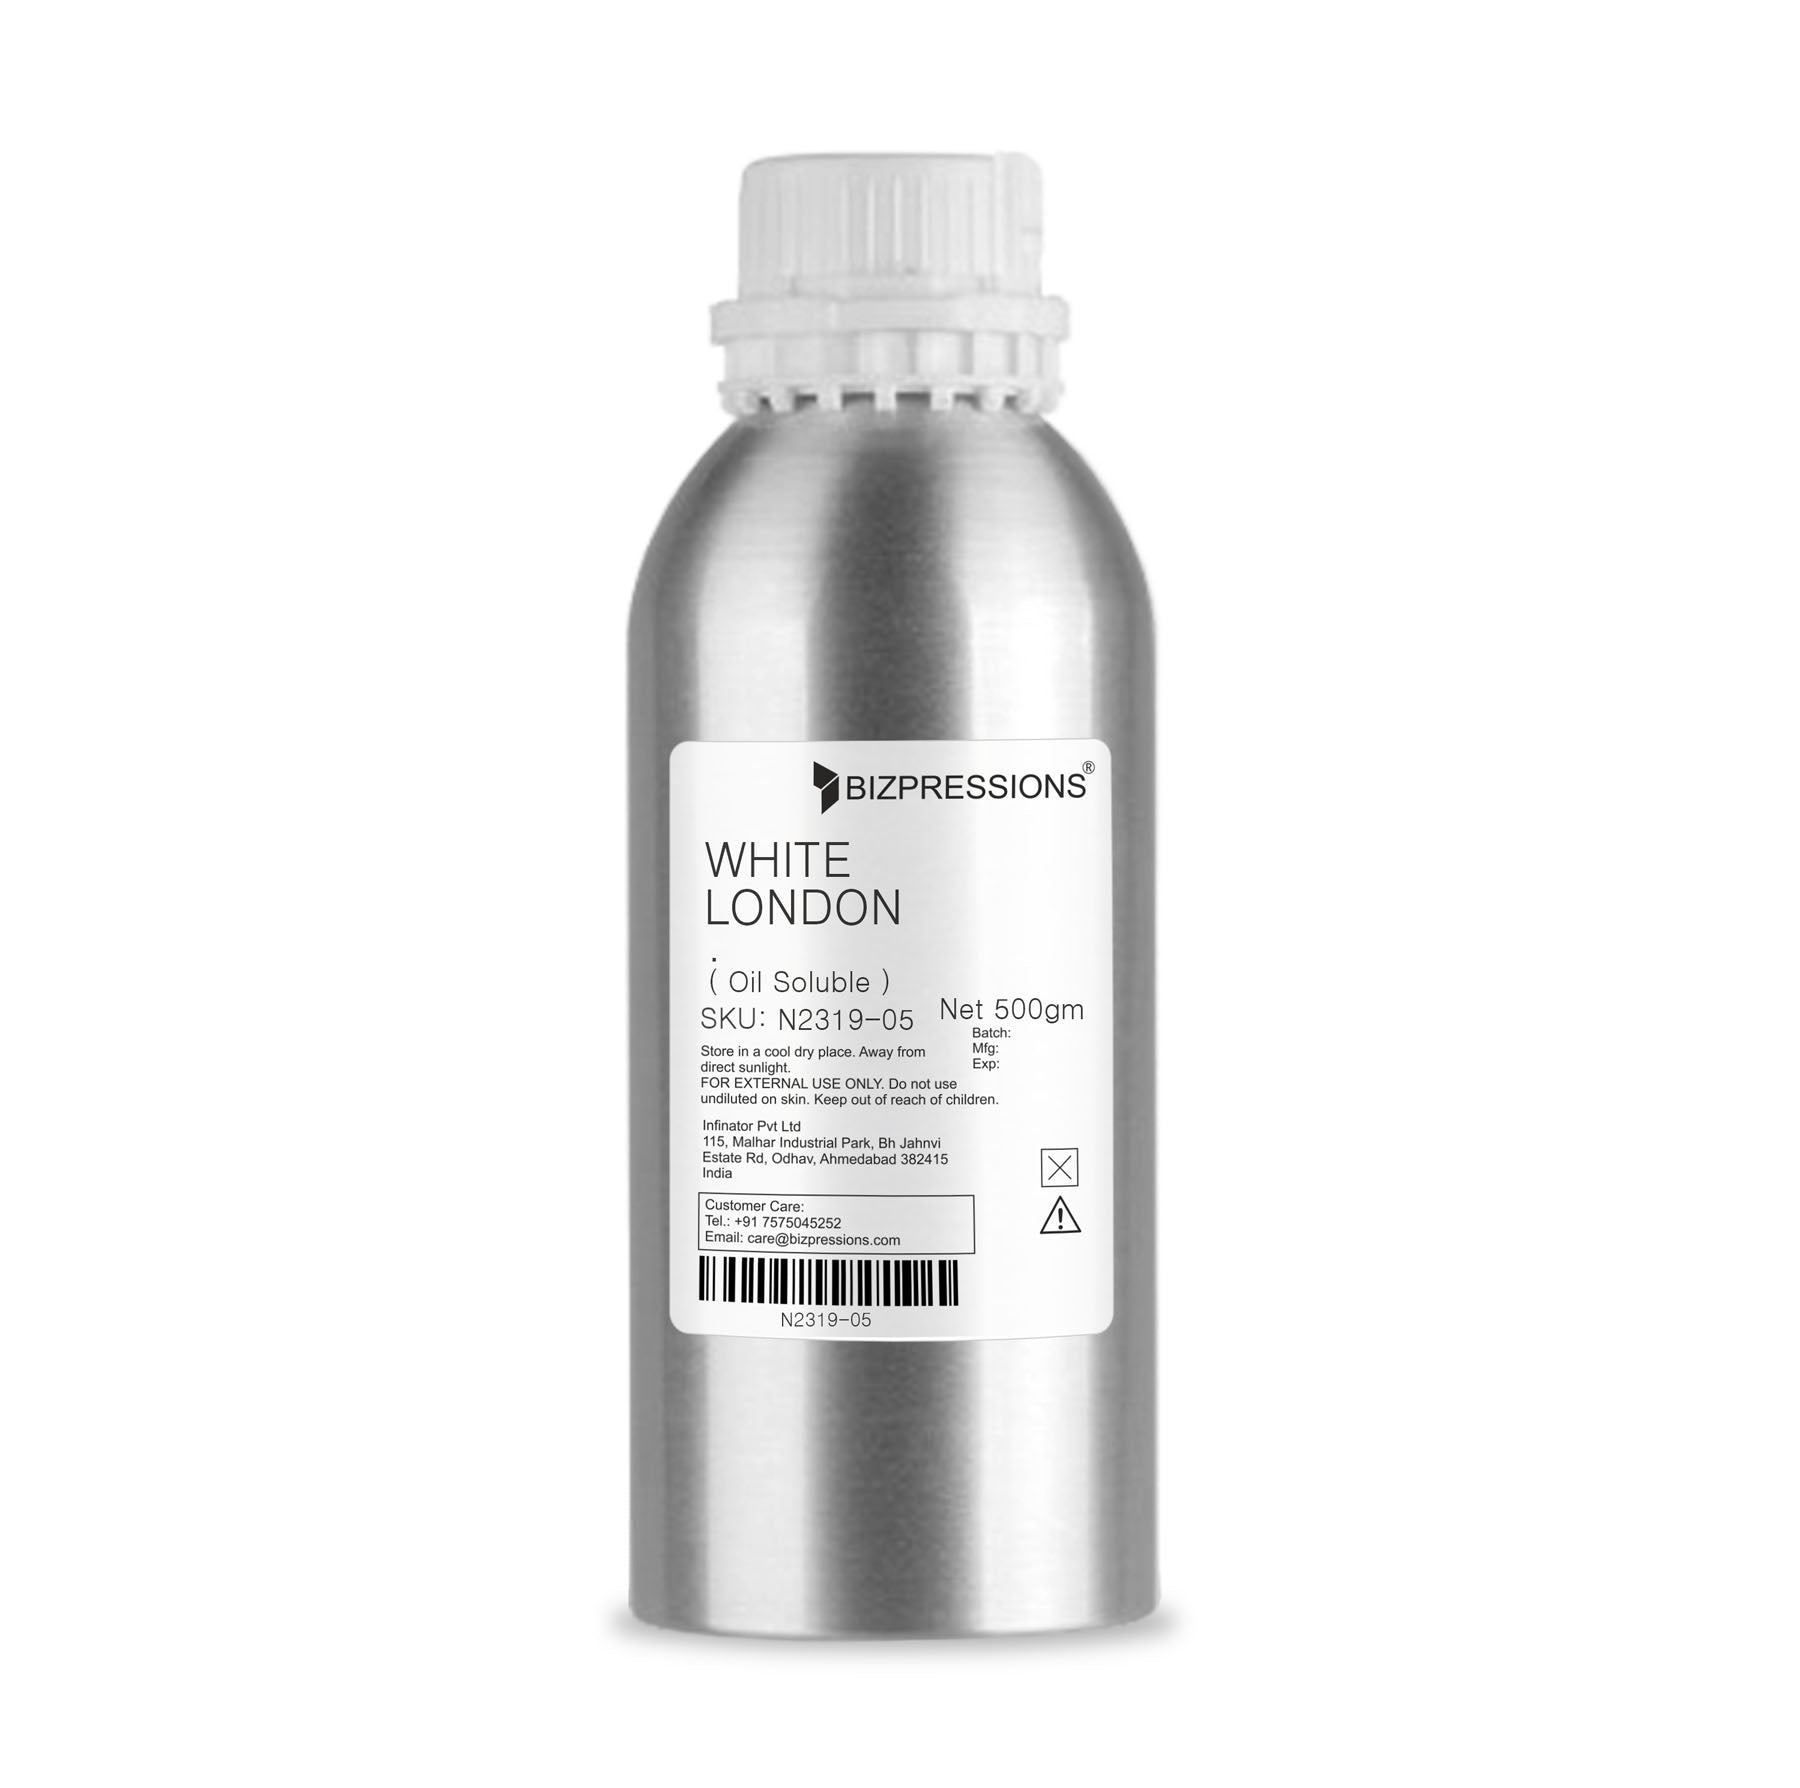 WHITE LONDON - Fragrance ( Oil Soluble ) - 500 gm